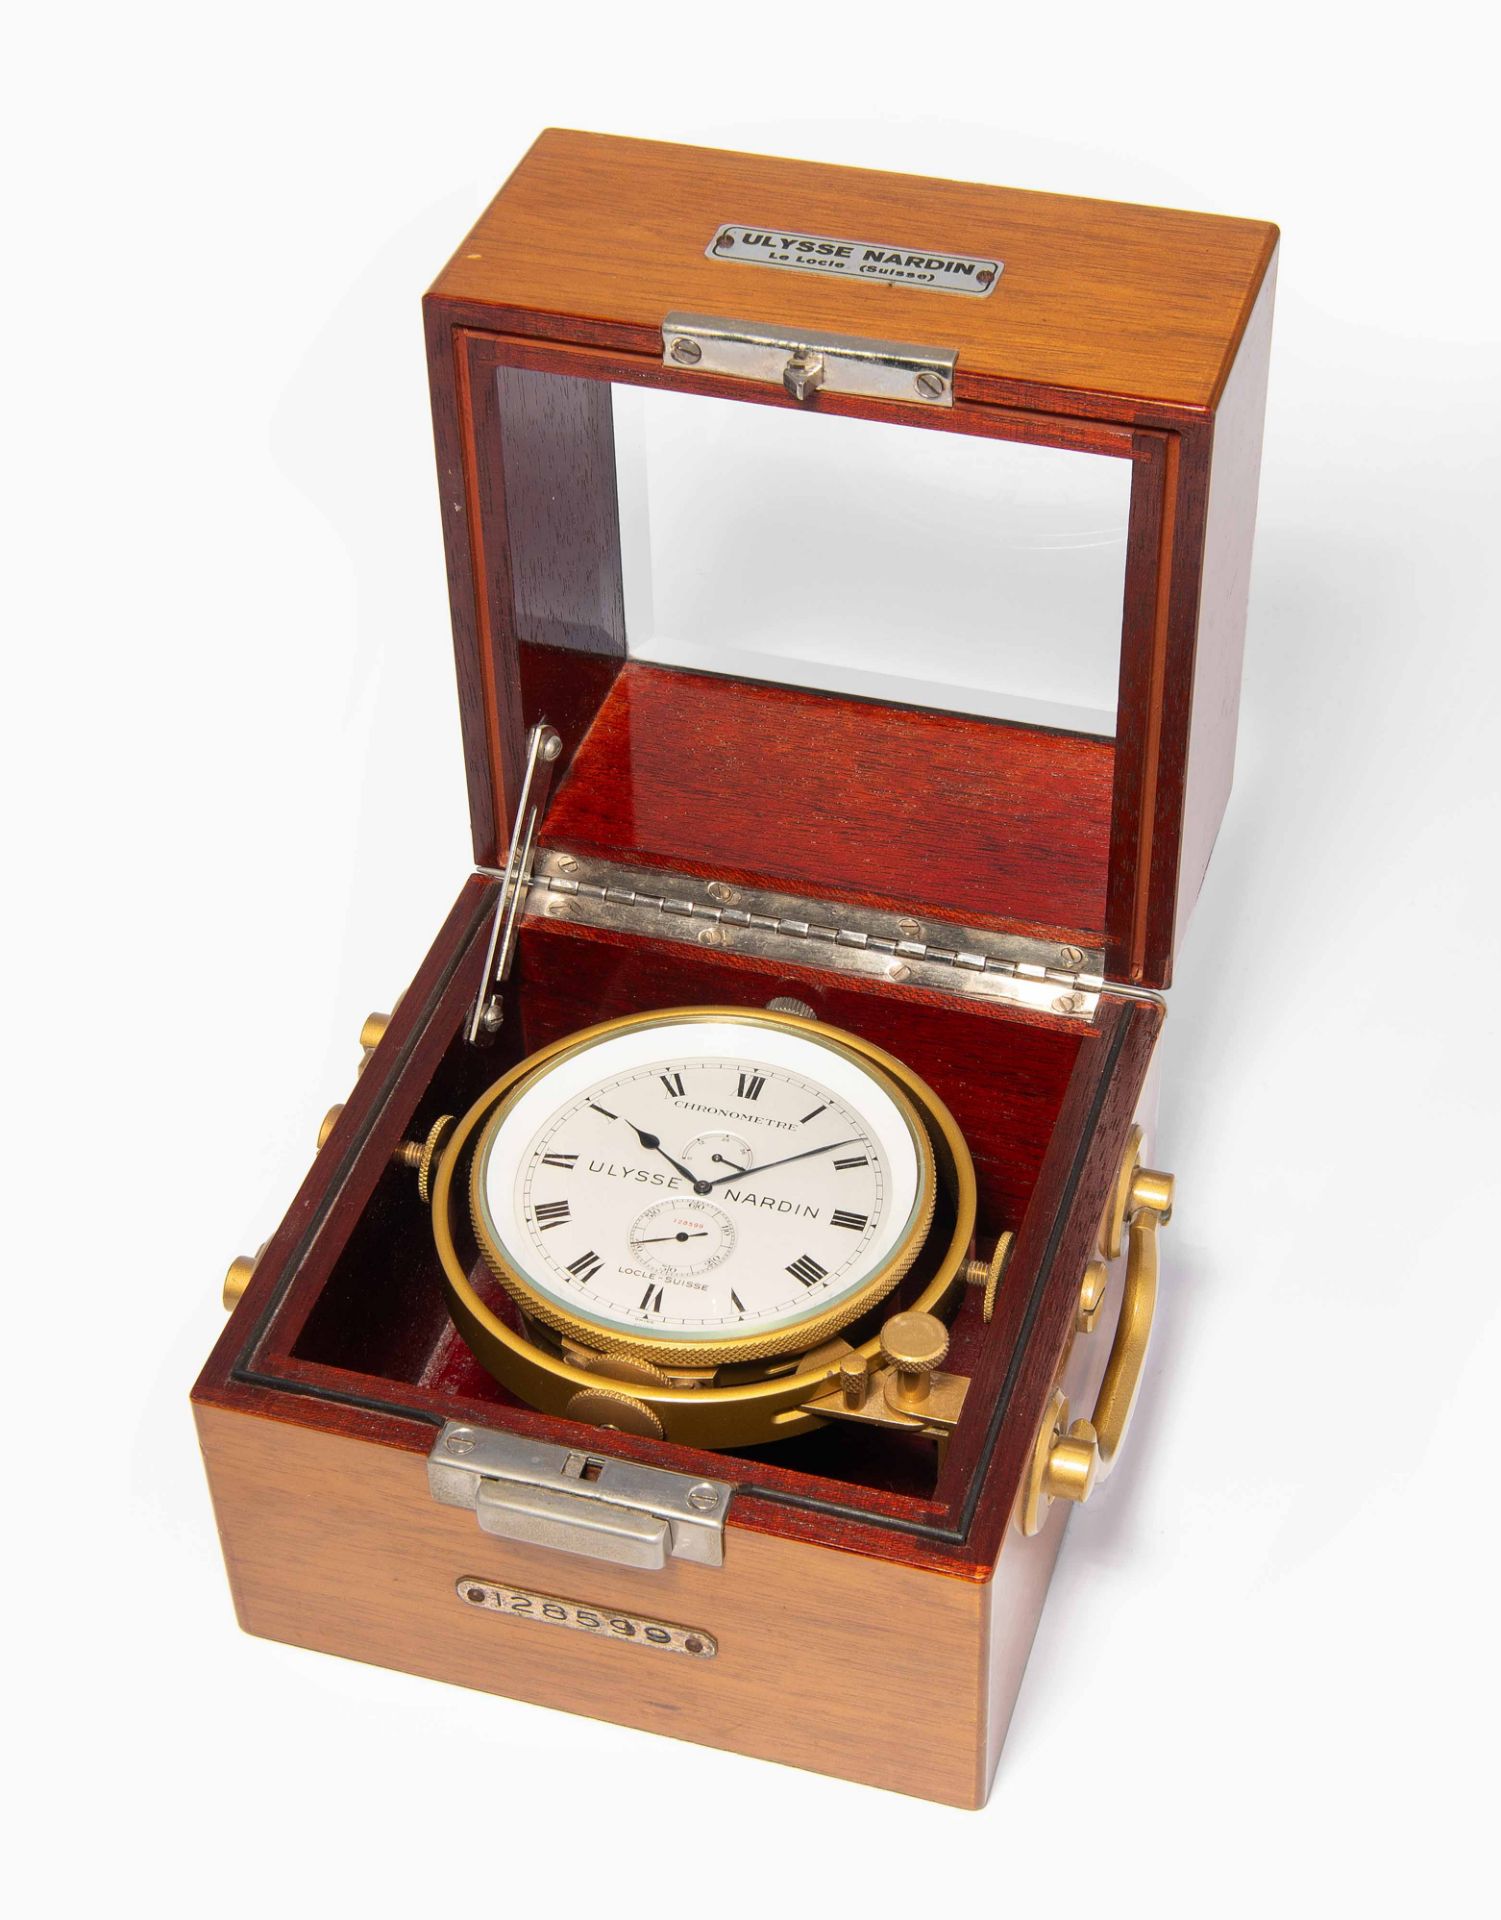 Schiffschronometer Ulysse Nardin - Image 2 of 3